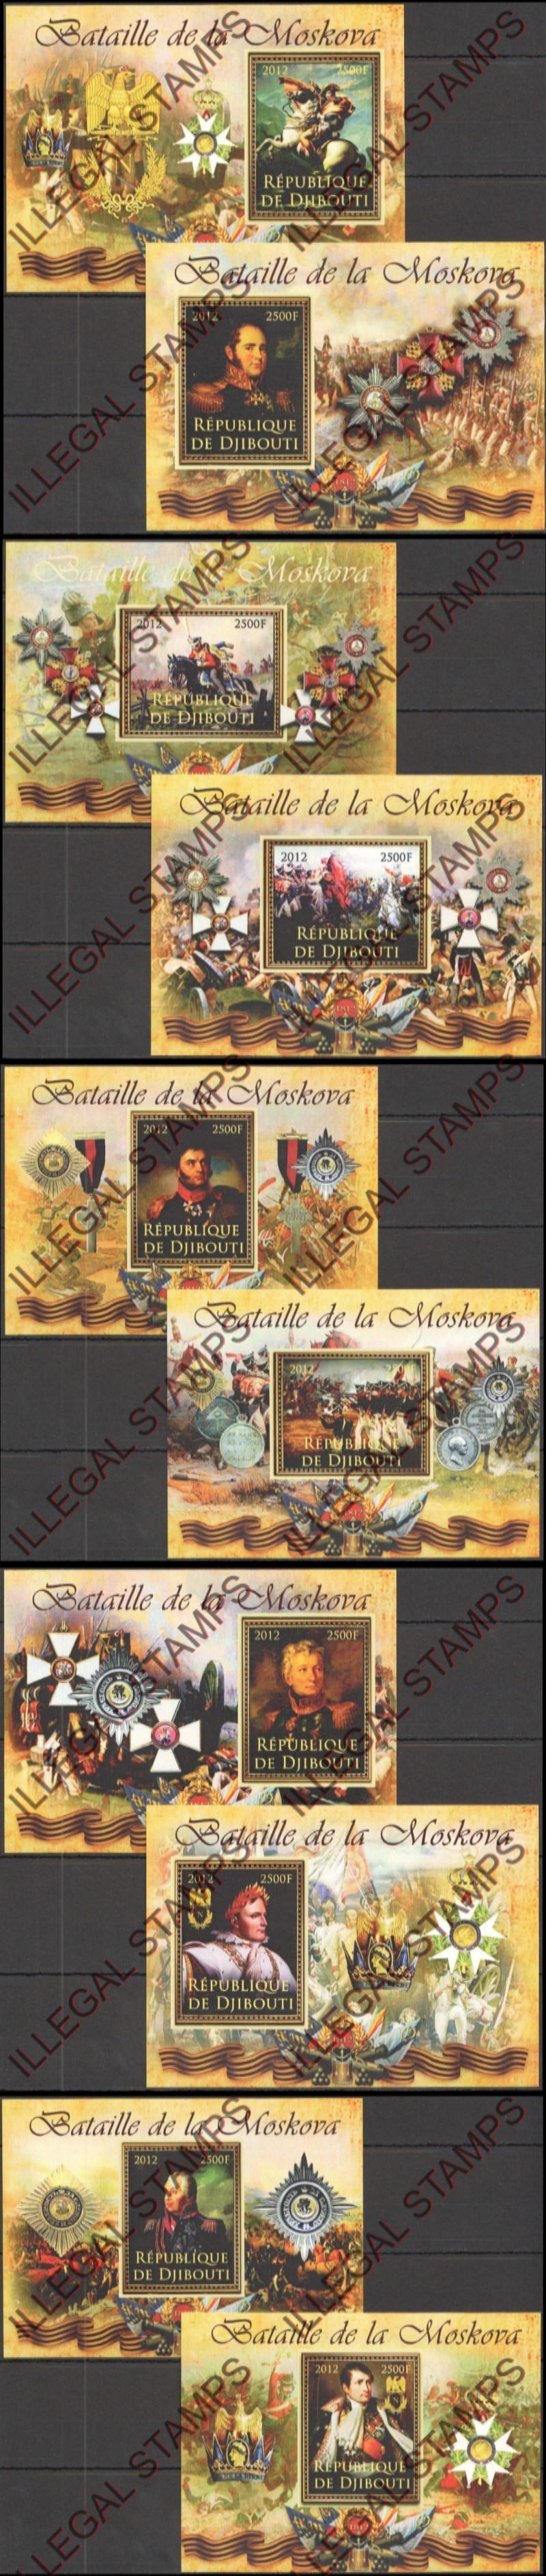 Djibouti 2012 Battle of Moskova Illegal Stamp Souvenir Sheets of 1